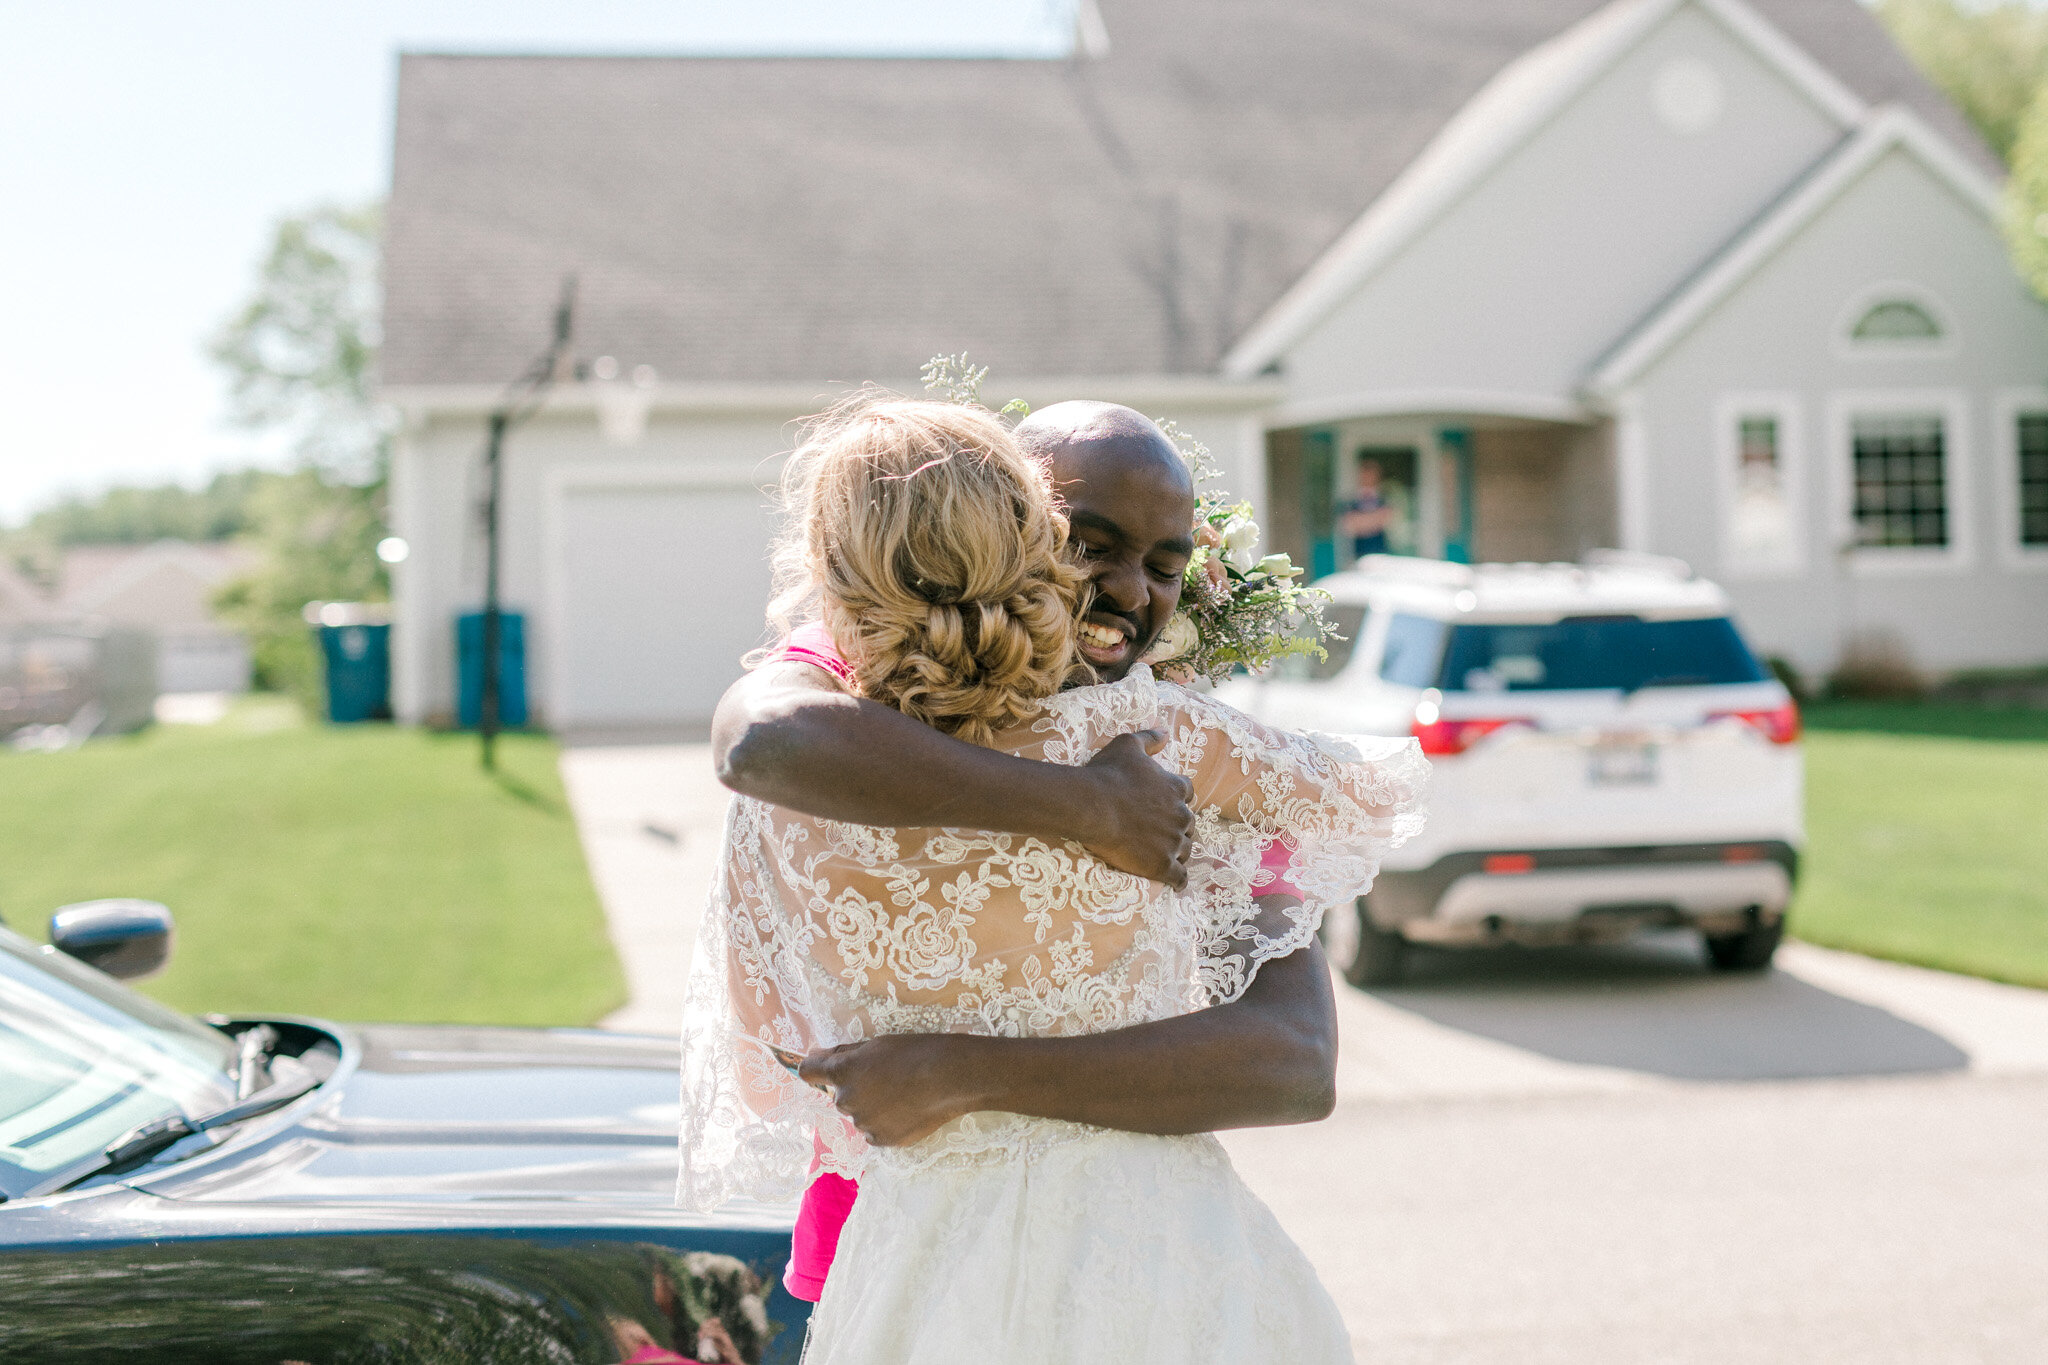 Intimate Backyard Elopement in Michigan | Light &amp; Airy Michigan Wedding Photographer